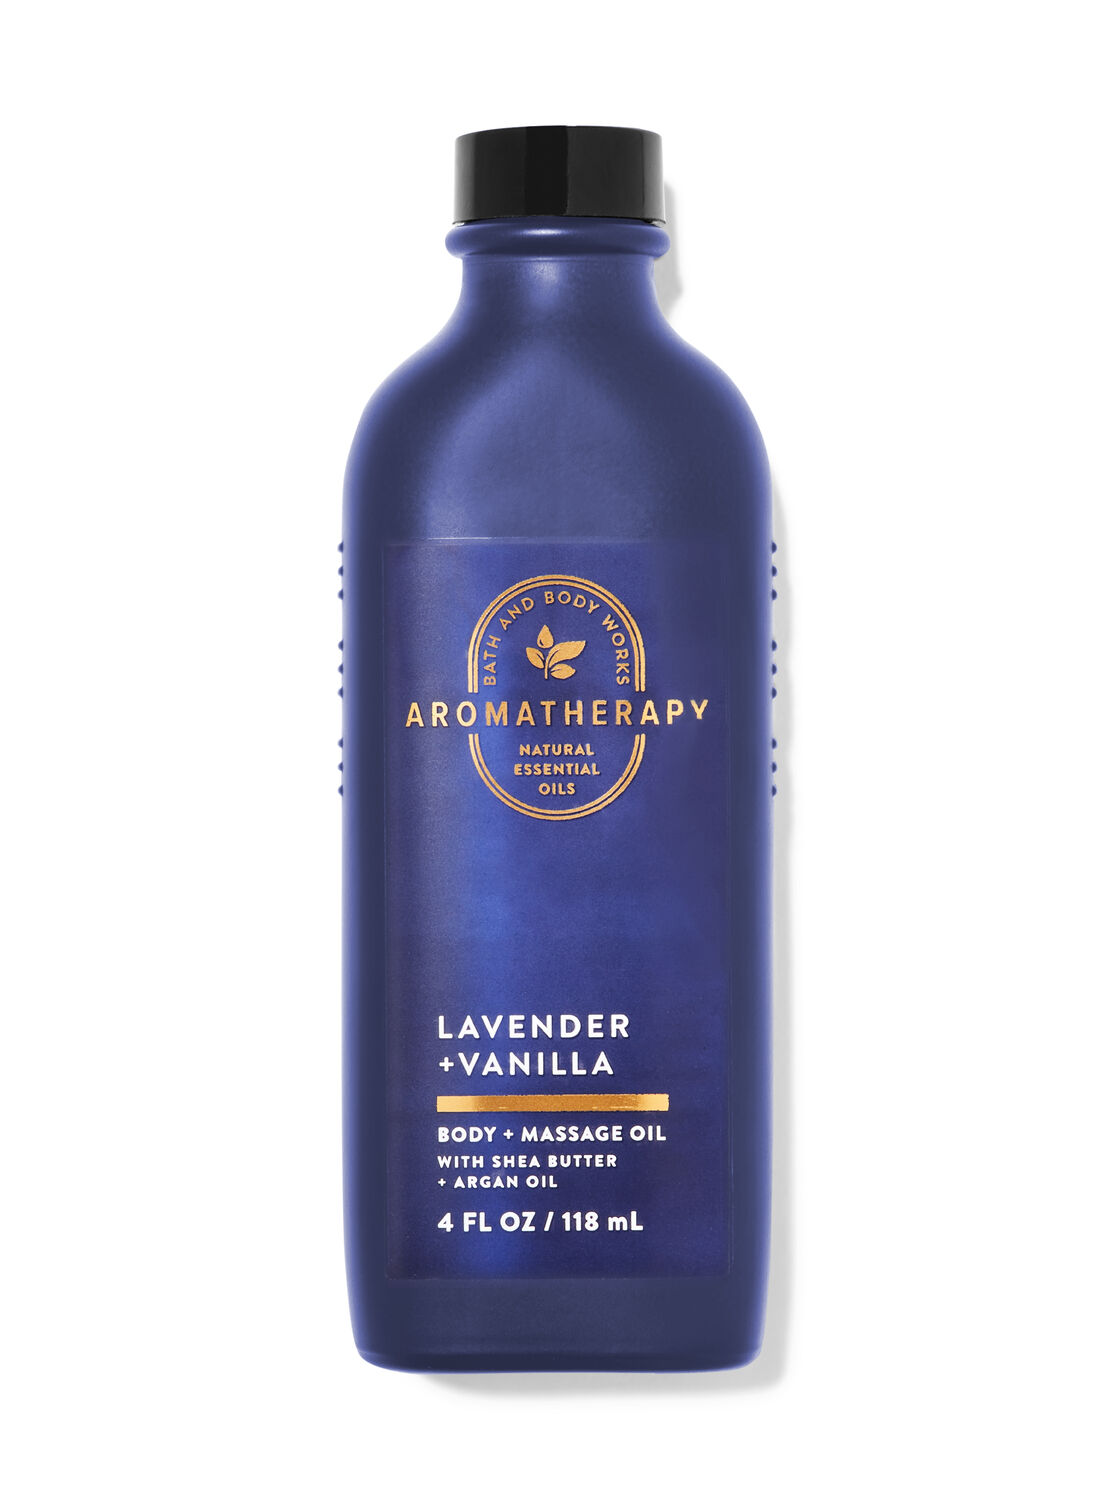 Bath & Body Works Aromatherapy Sleep - Lavender + Vanilla Body Lotion 6.5  Fl Oz 6.5 Fl Oz (Pack of 1)